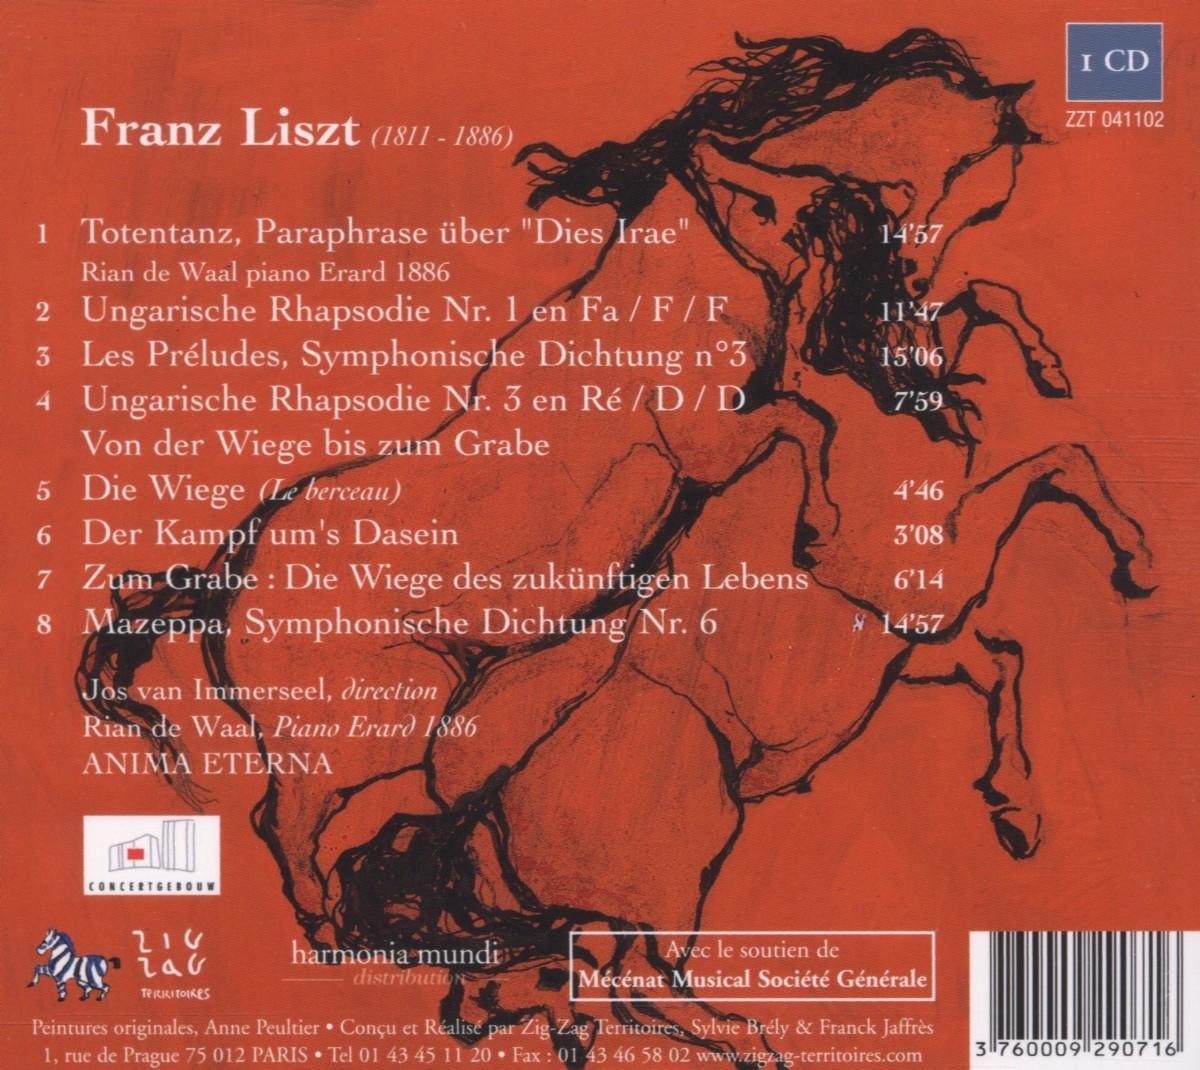 Liszt: Symphonische Dichtung n° 3 et 6 - slide-1